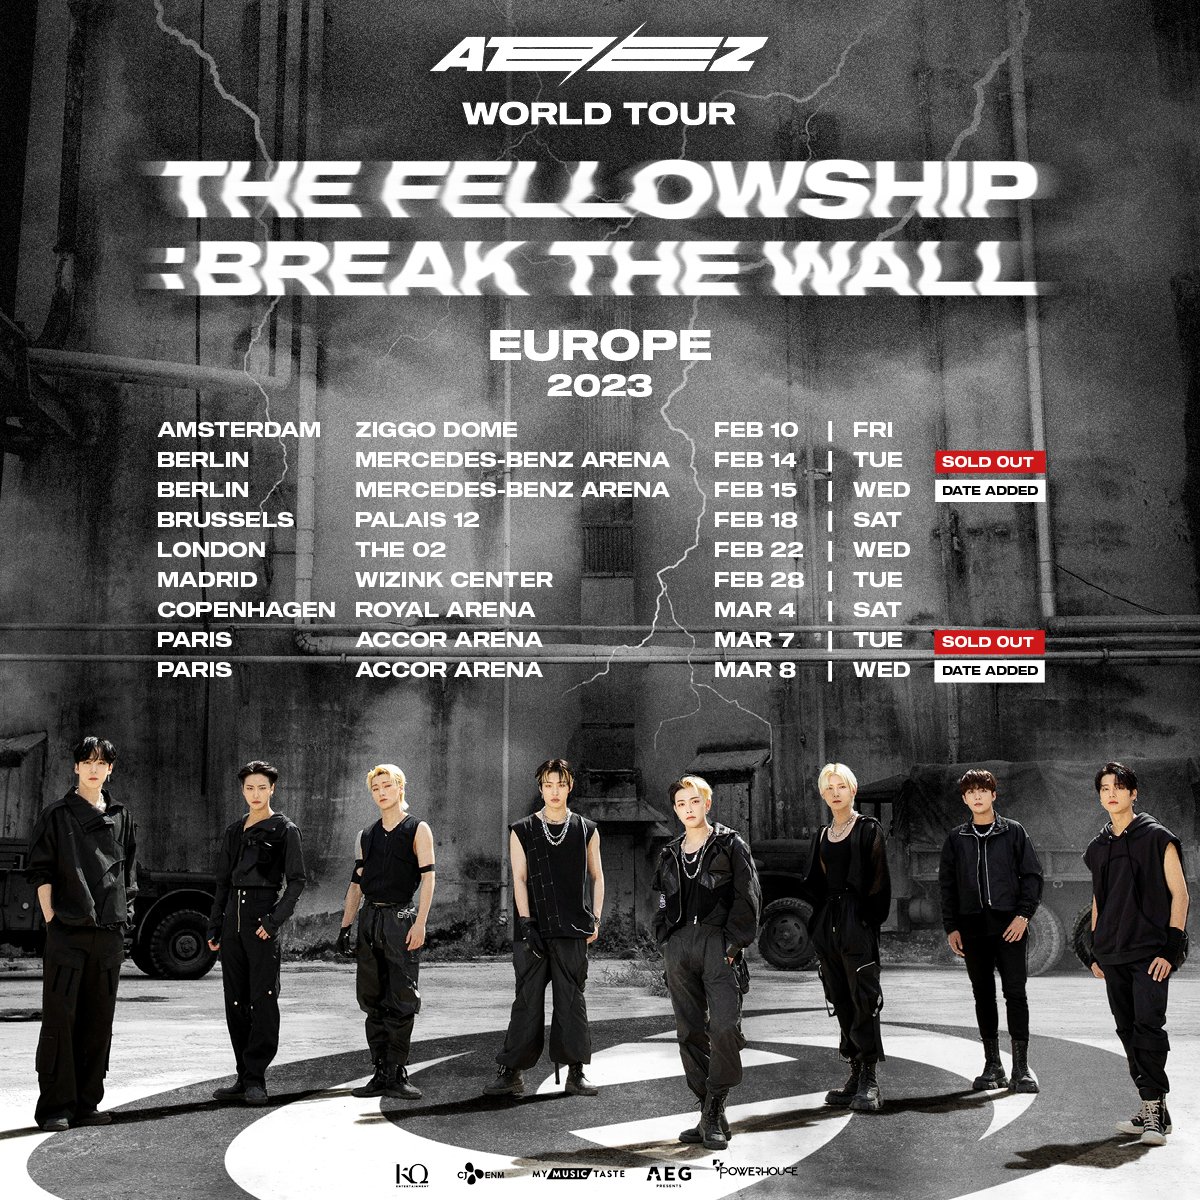 ATEEZ(에이티즈) on Twitter "RT AEG_Presents ATEEZ THE FELLOWSHIP BREAK